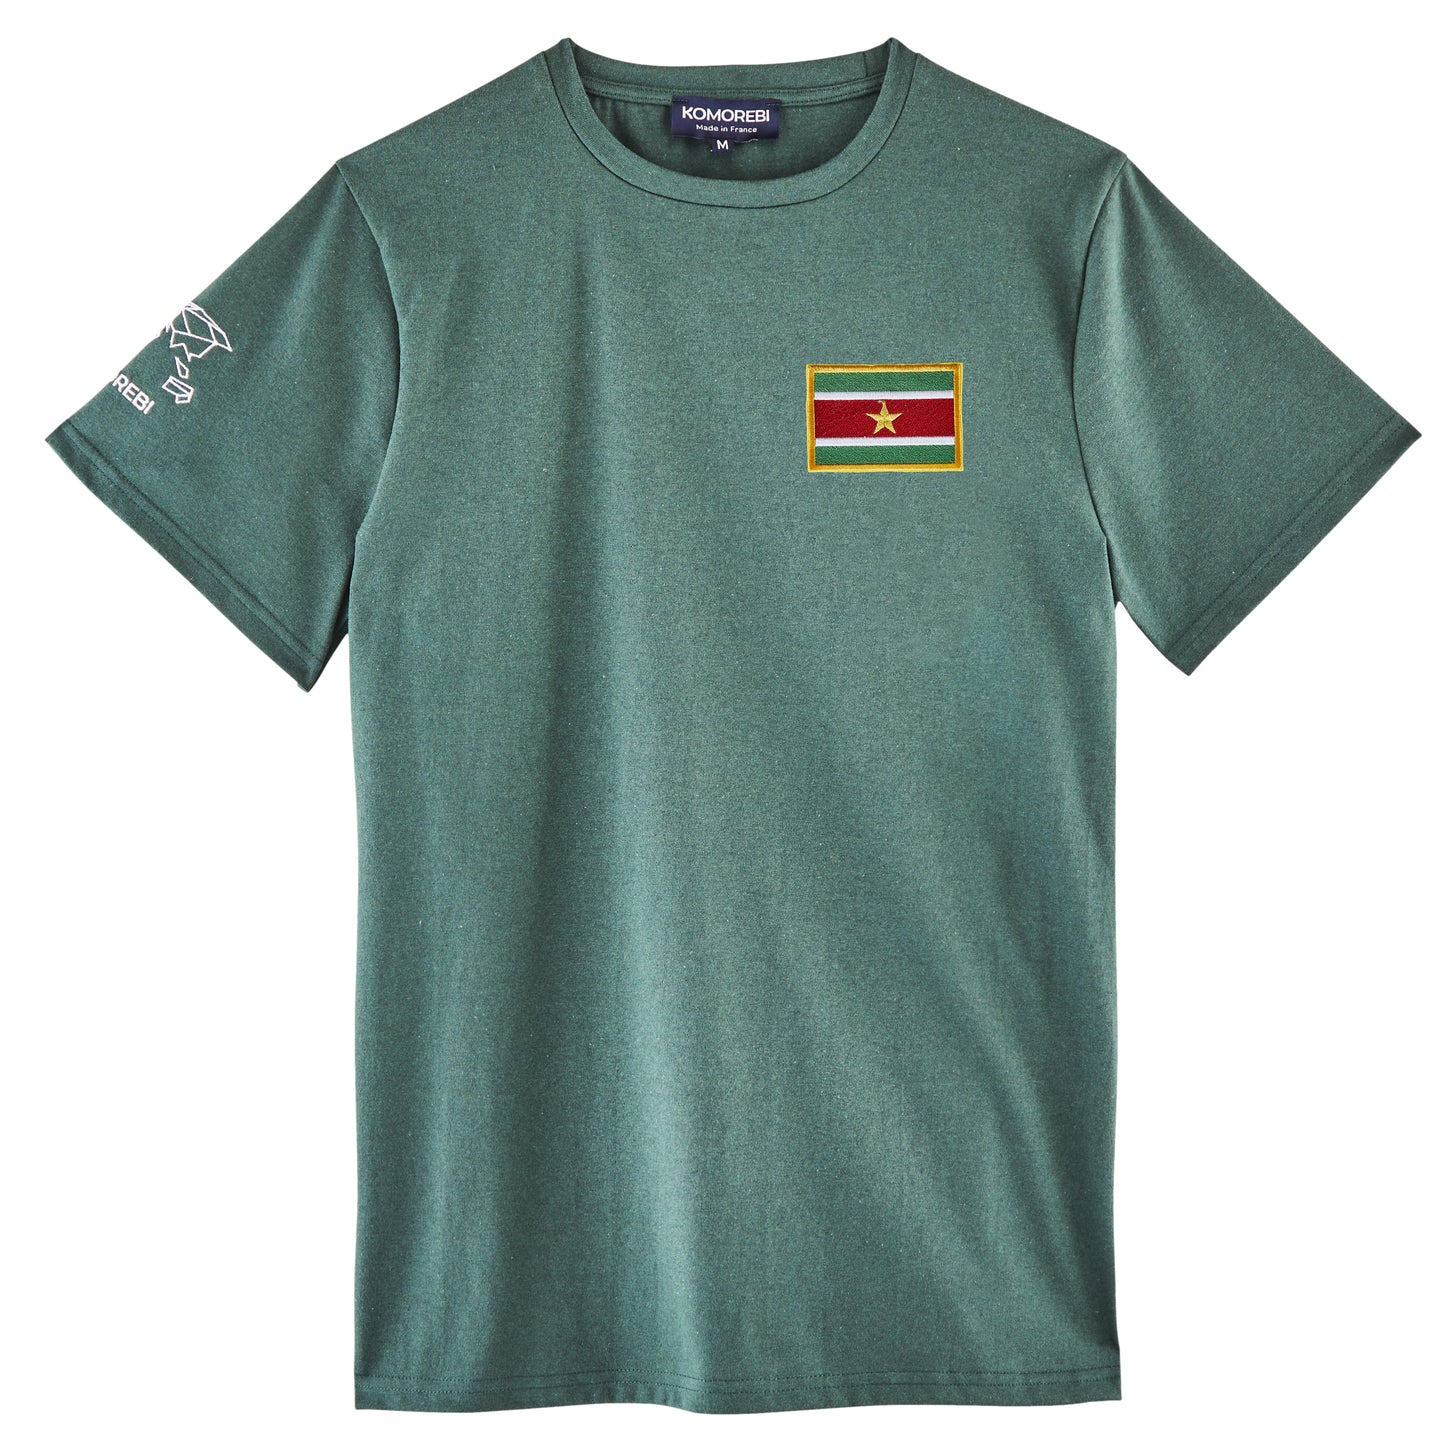 Suriname - flag t-shirt